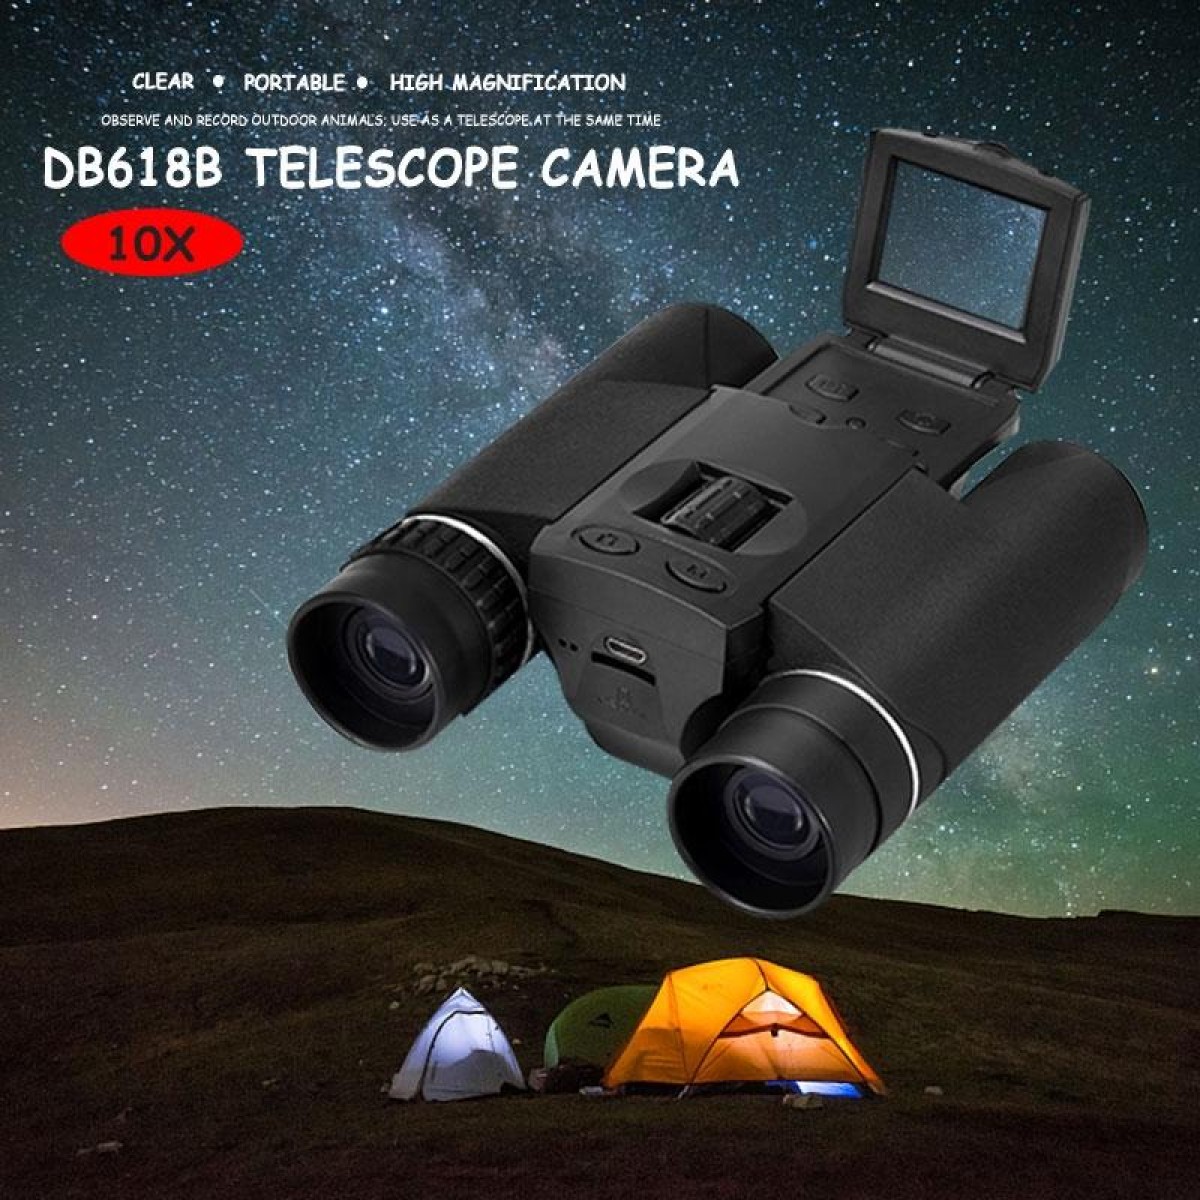 DB618B 10X25 Zoom 10mm Objective Lens HD 1280x960P 1.5 inch LCD Screen Binocular Telescope Digital Camera(Black)